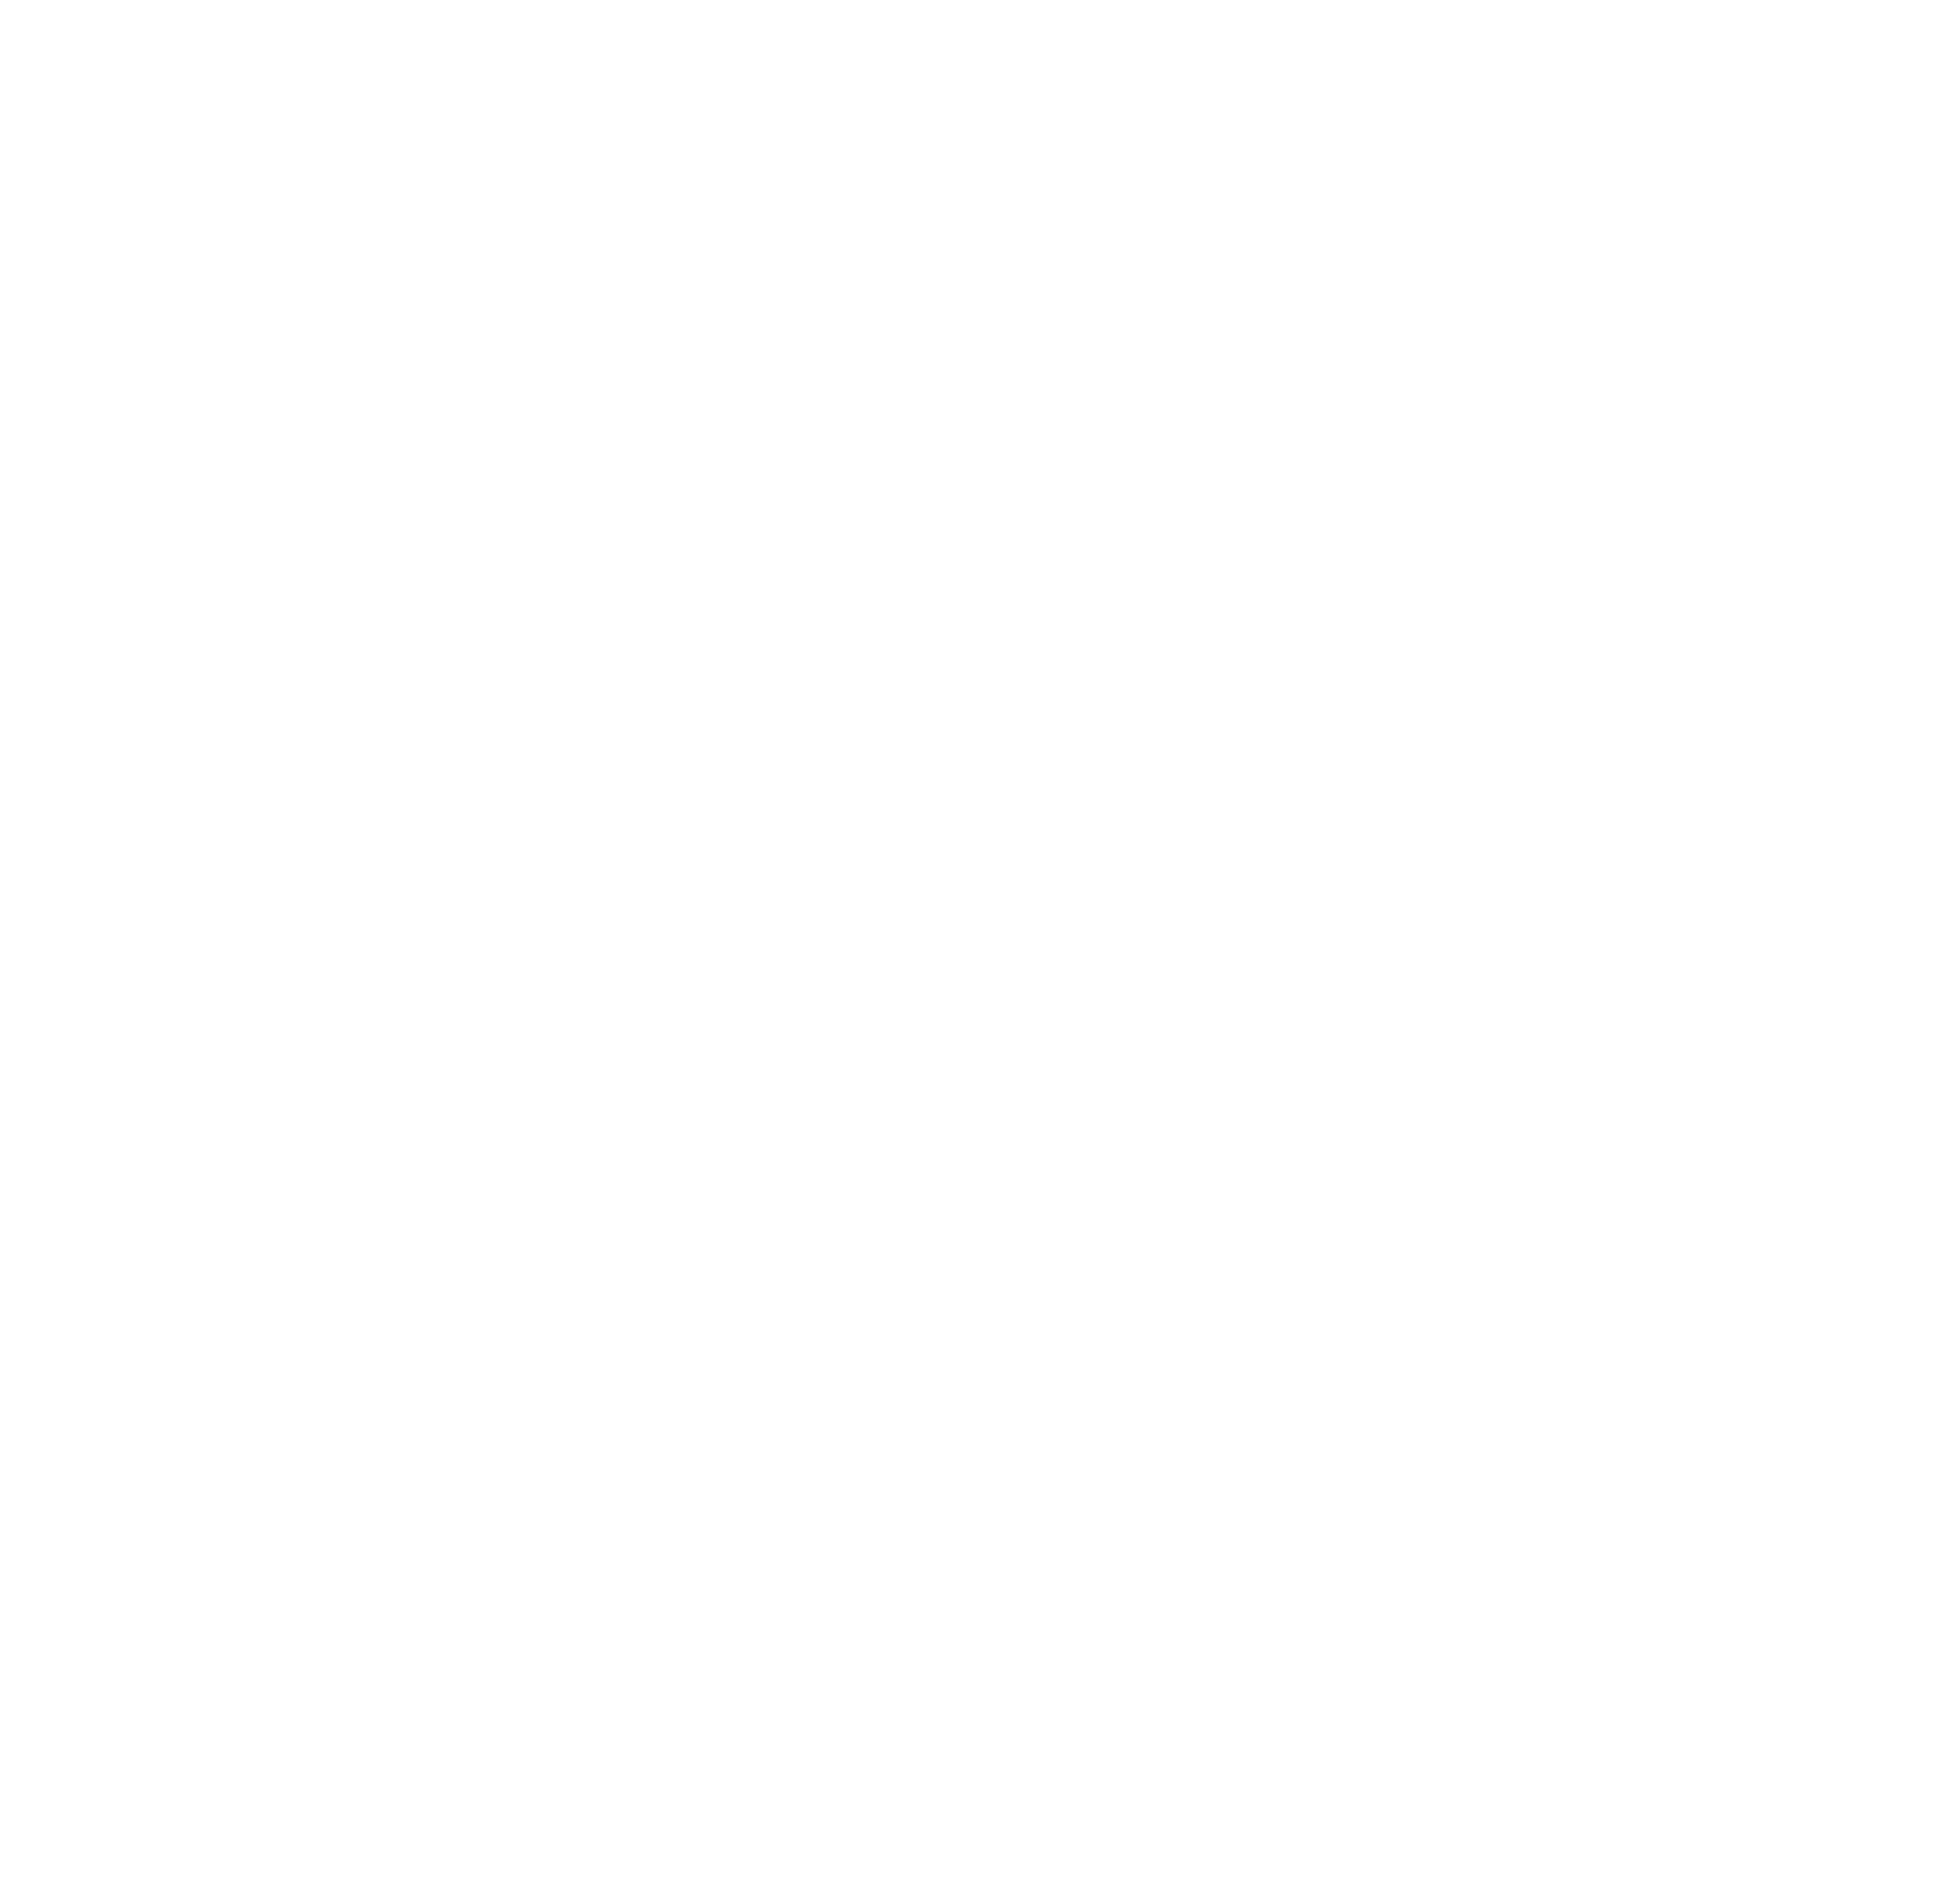 ATEBIT Logo - Transparent BG